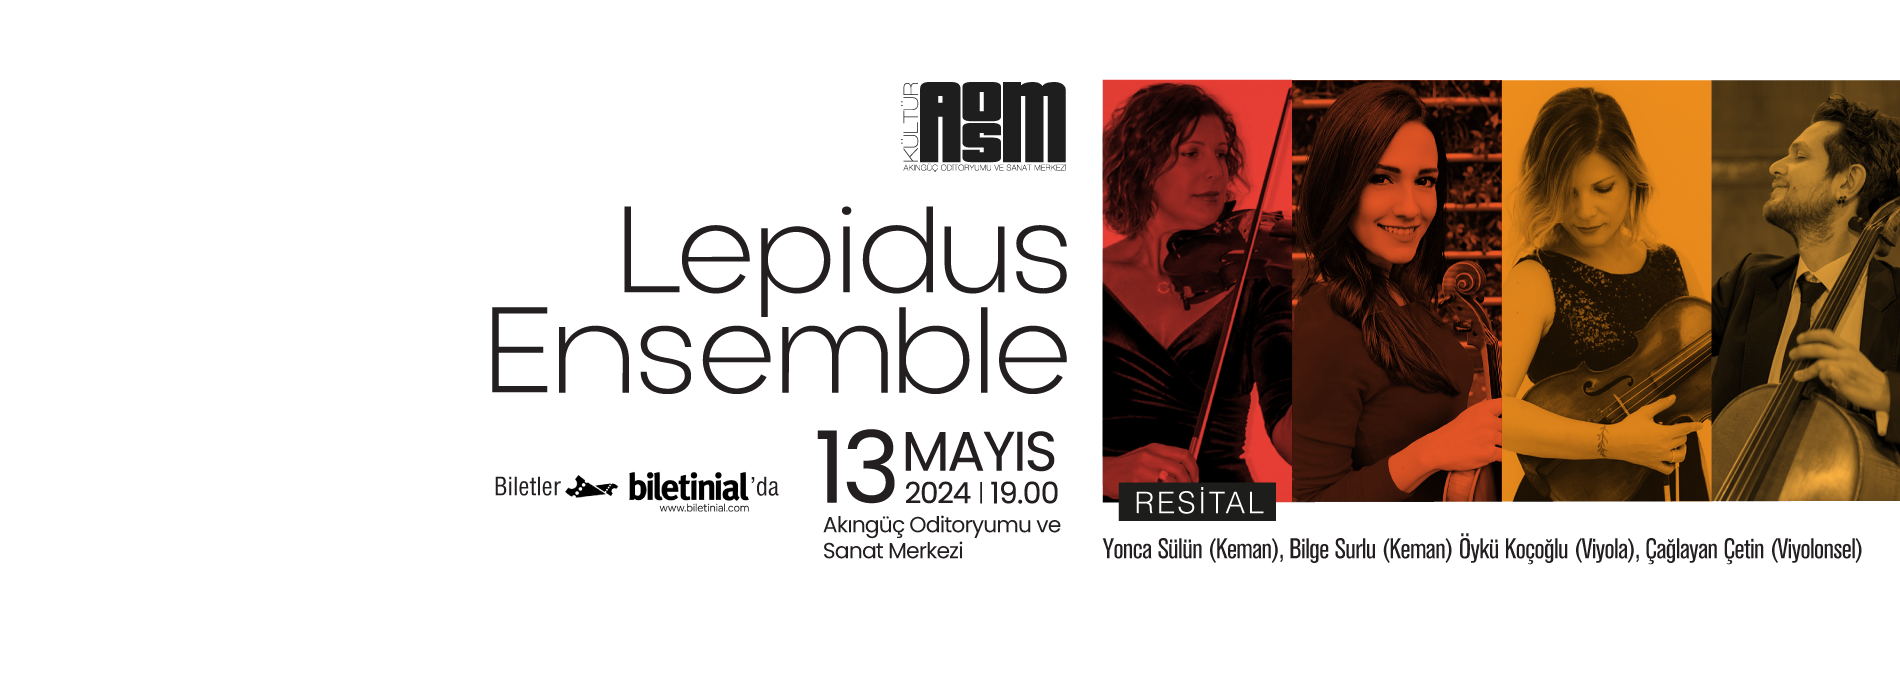 Lepidus Ensemble Resitali